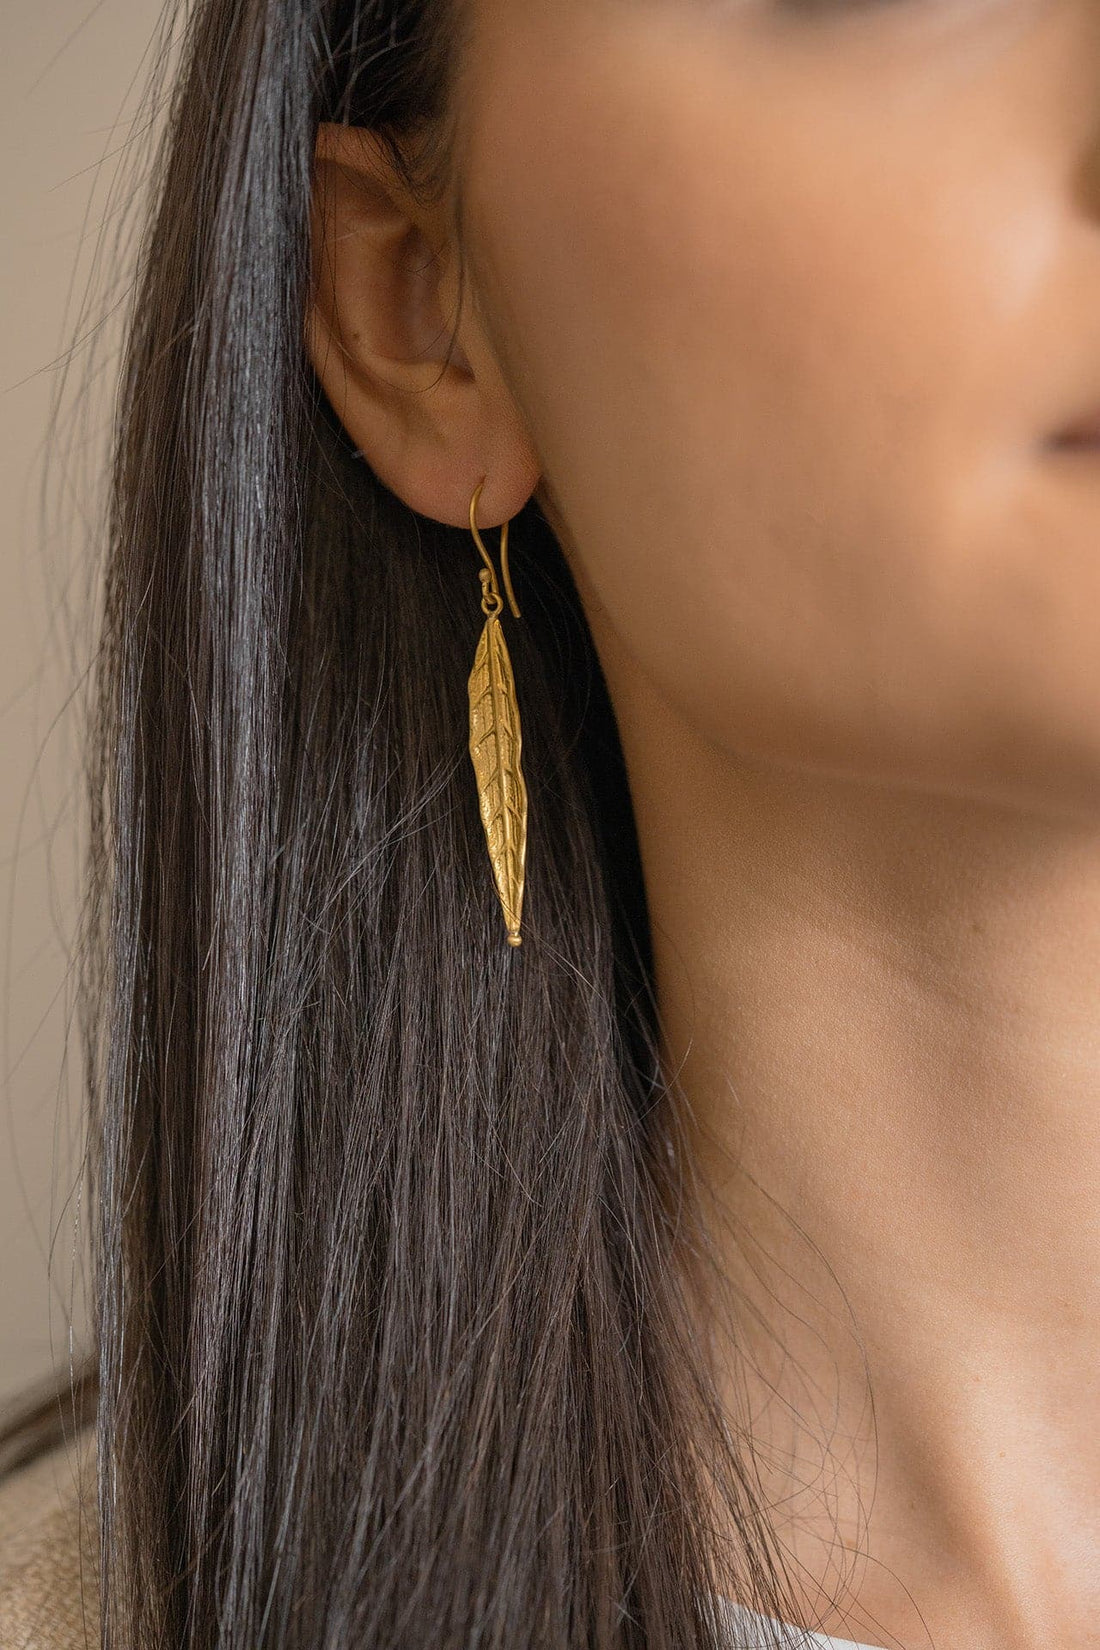 Lika Behar 'Willow' Yellow Gold Leaf Dangle Earrings - Skeie's Jewelers